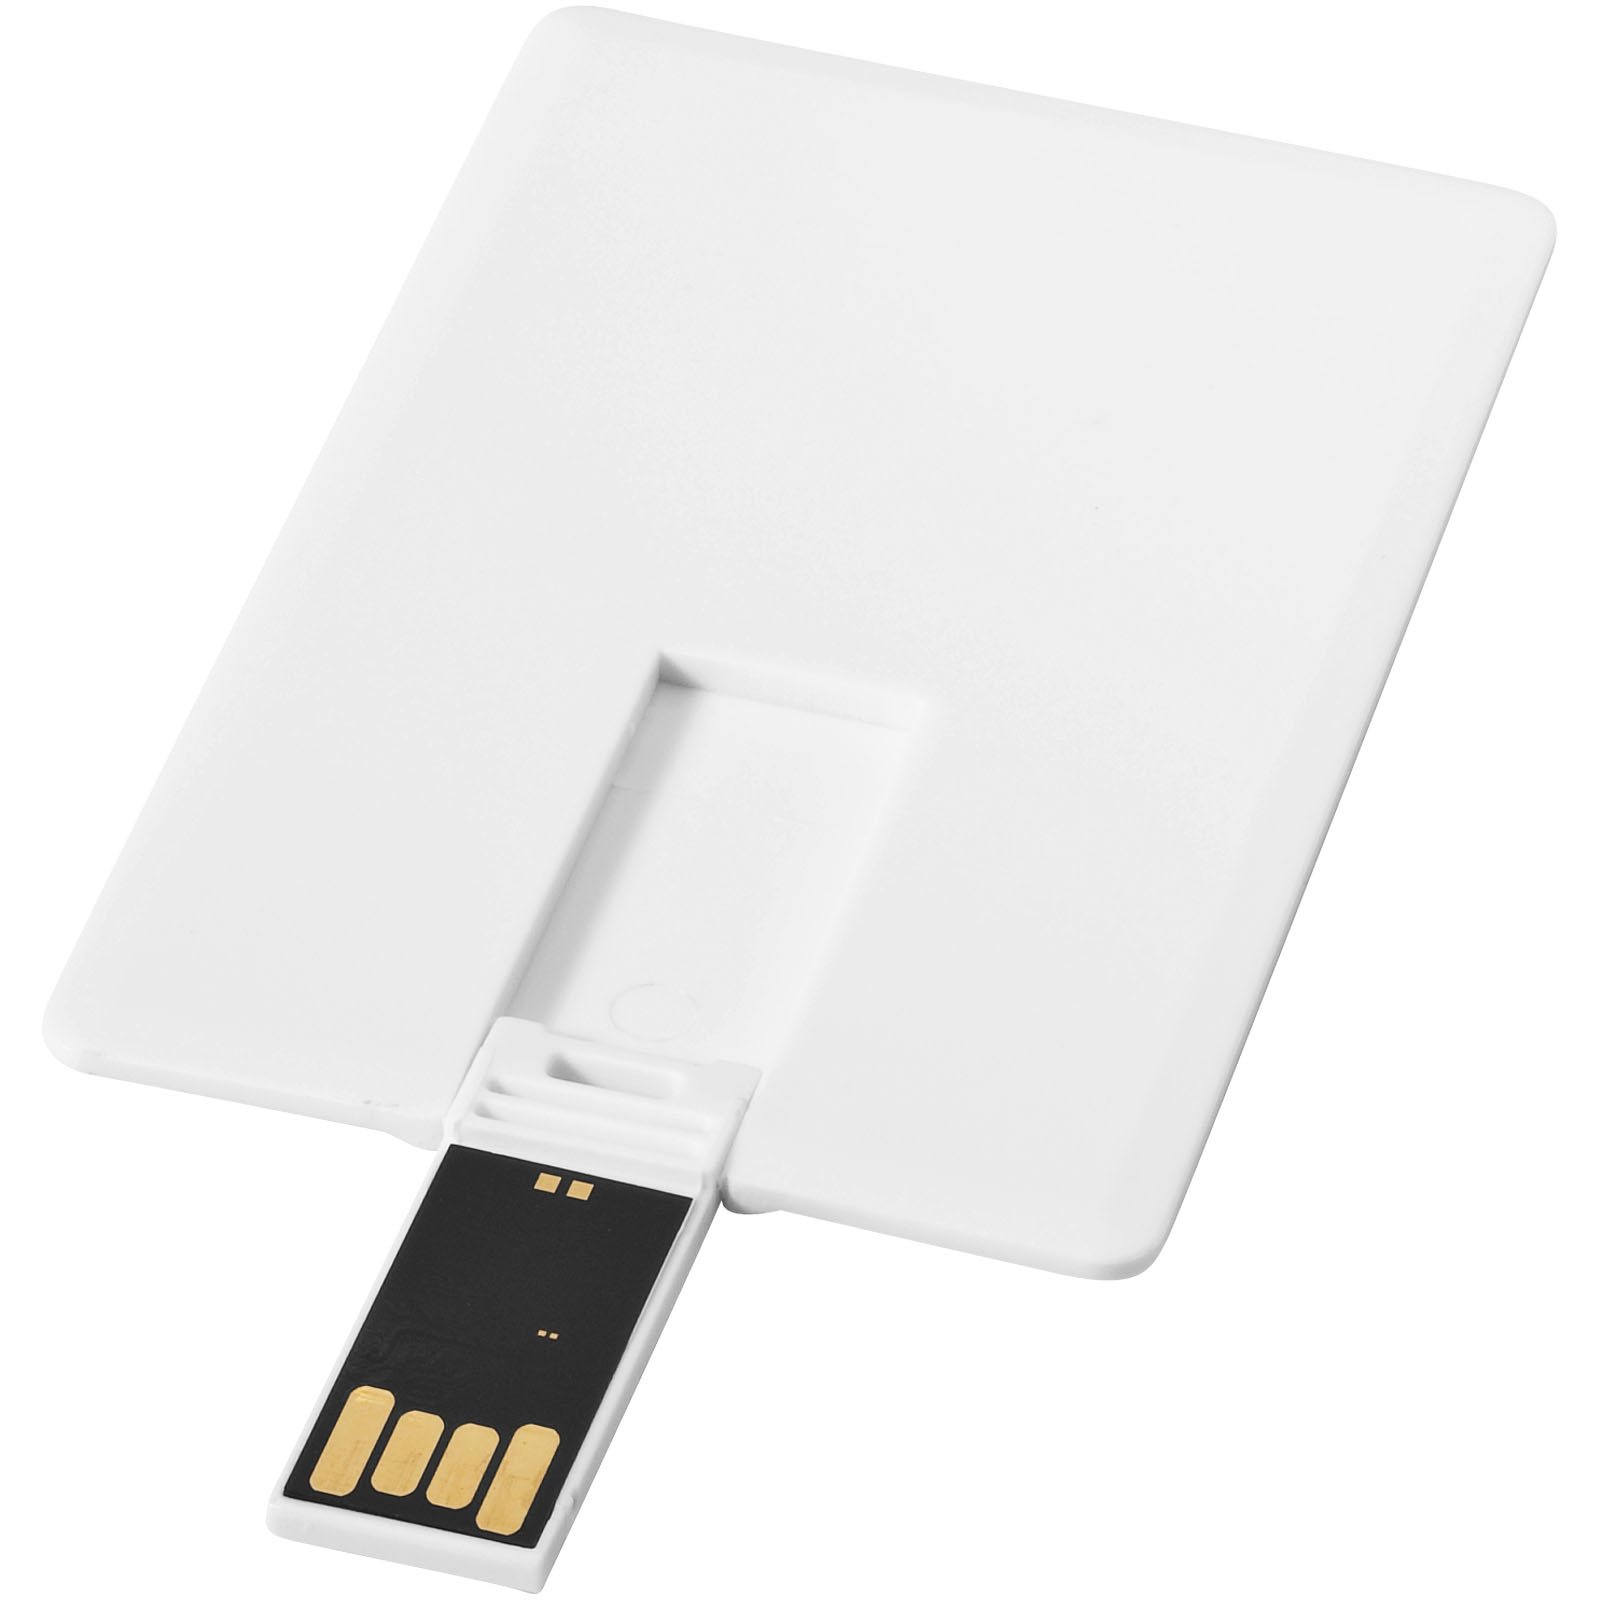 Advertising USB Flash Drives - Slim card-shaped 4GB USB flash drive - 0